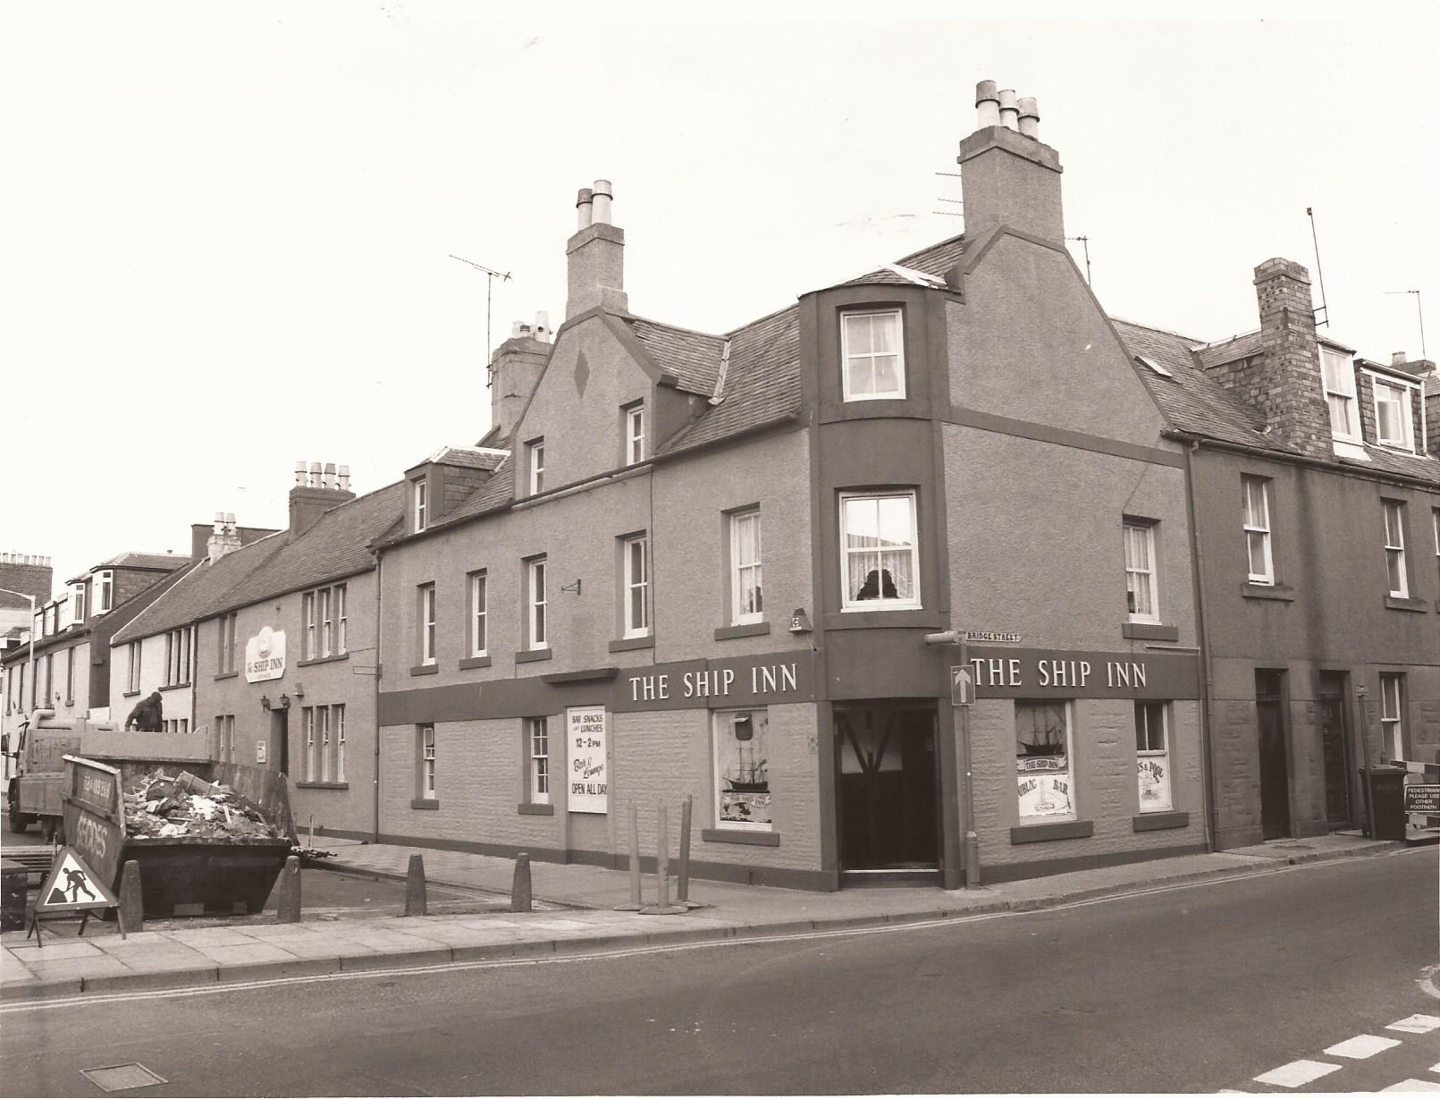 The Ship Inn was another classic Arbroath pub.